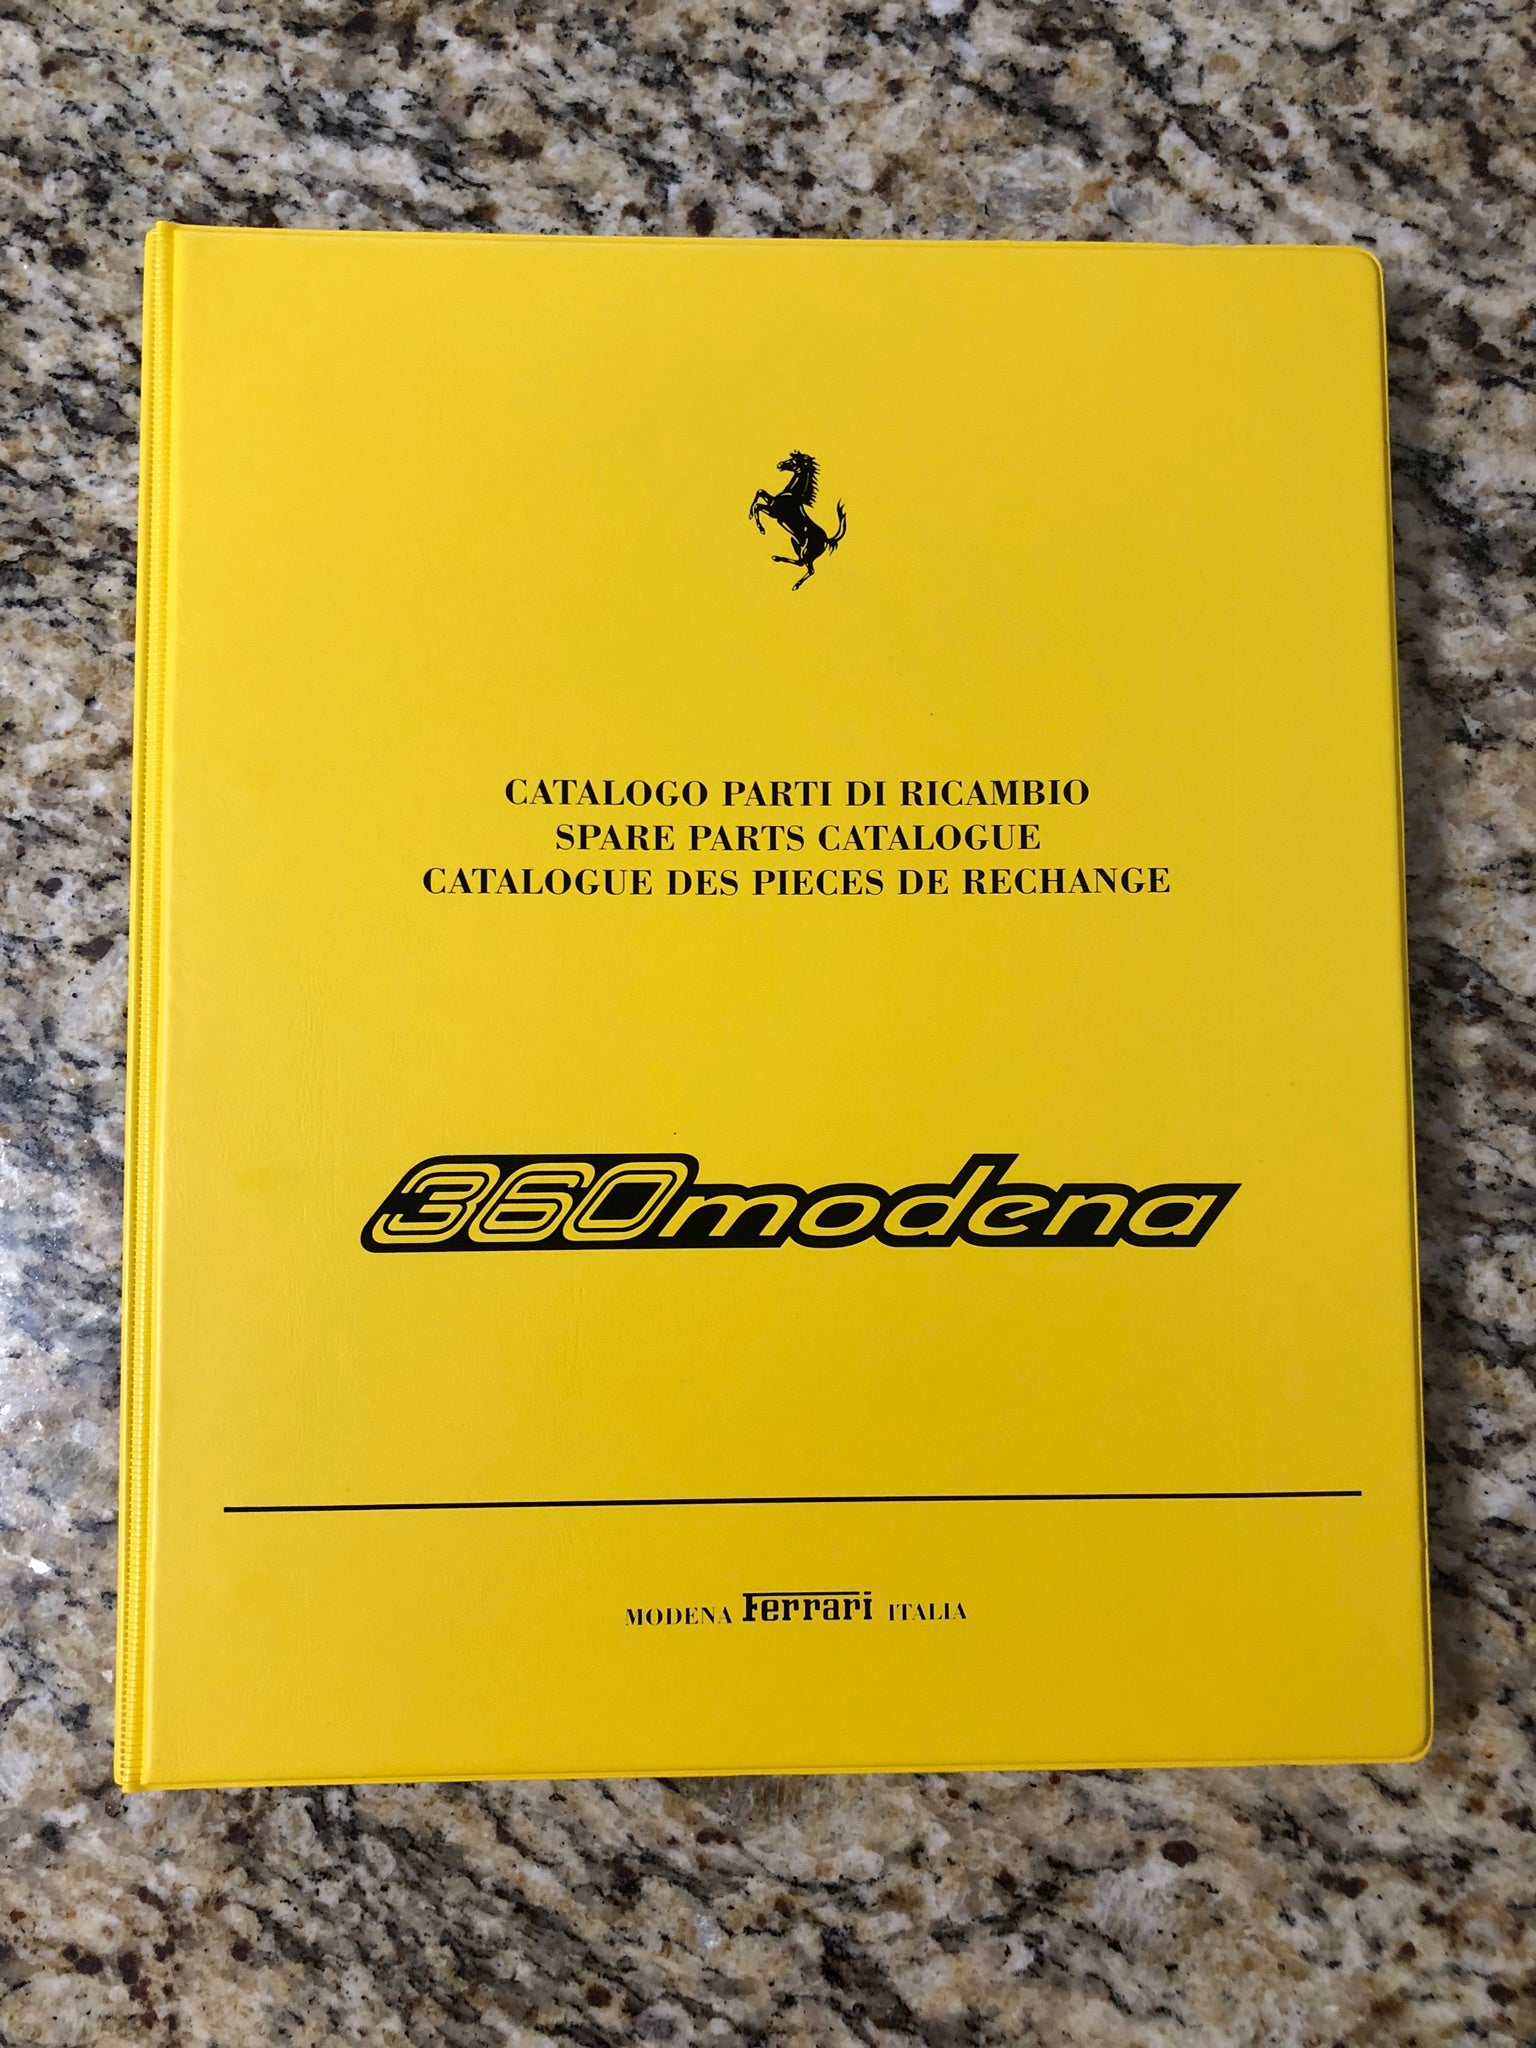 Ferrari 360 Modena Spare parts Catalogue 2000